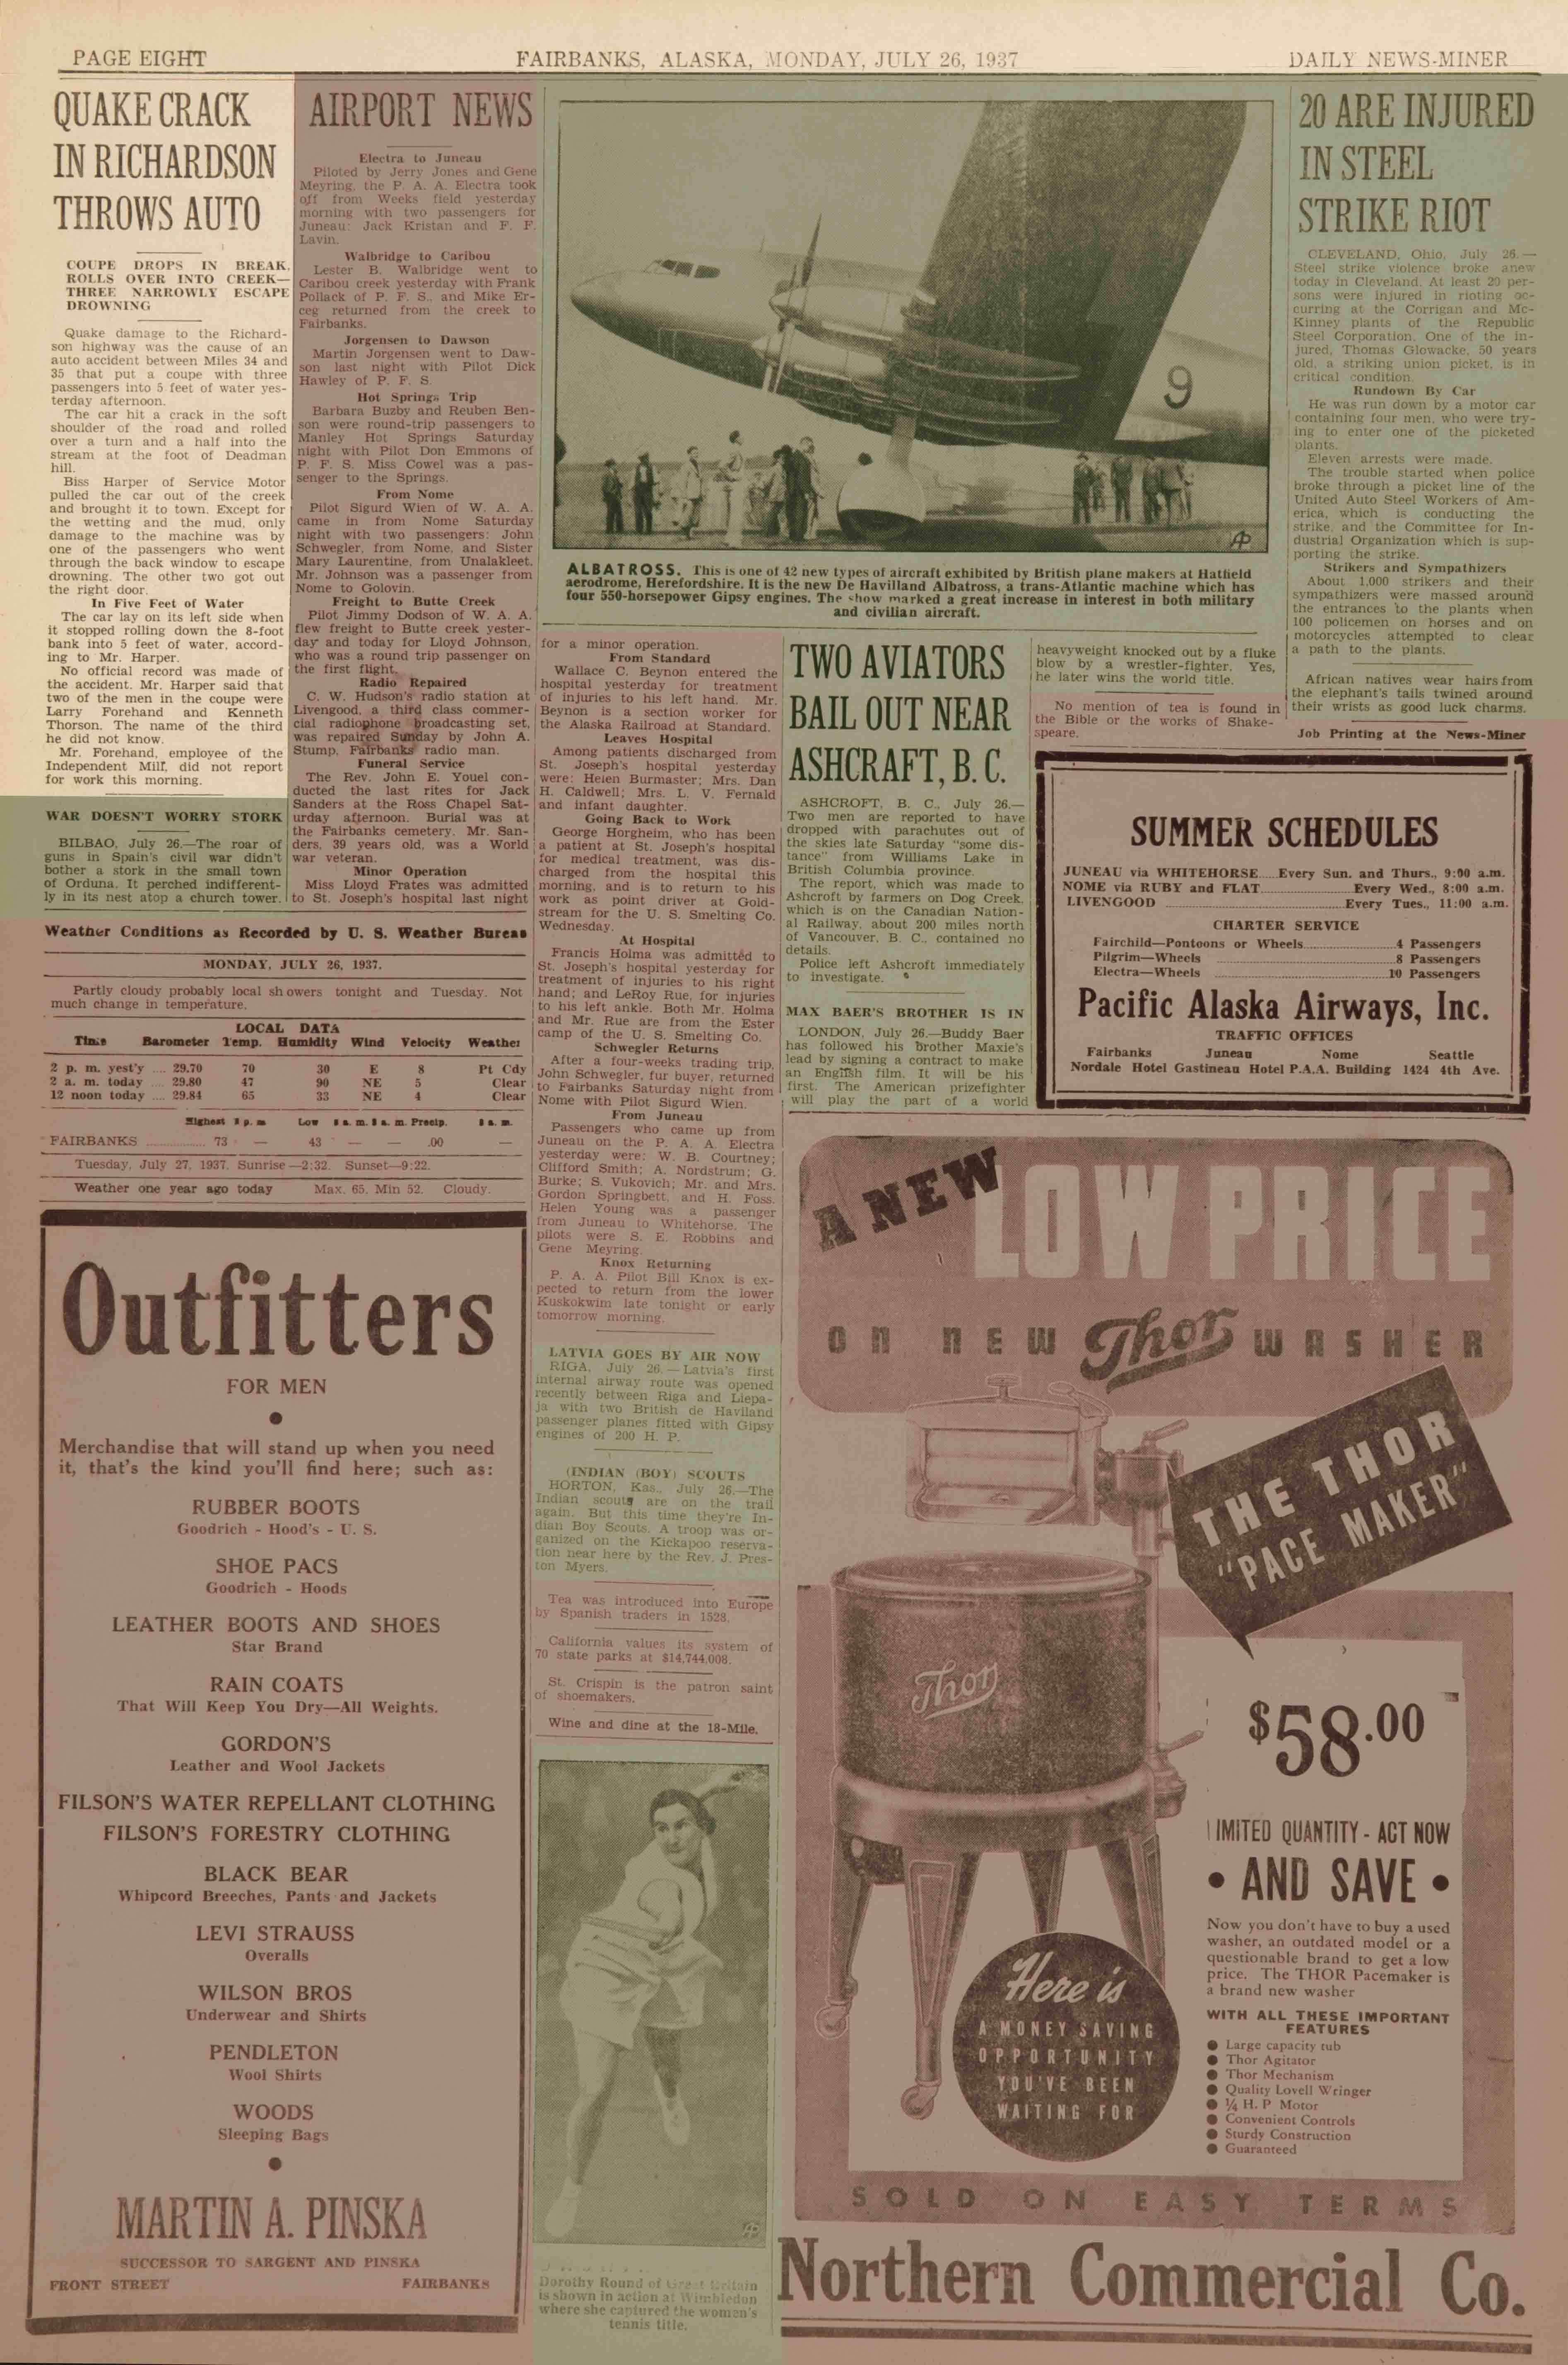 1937 July 26, Fairbanks Daily News-Miner (pg 8)